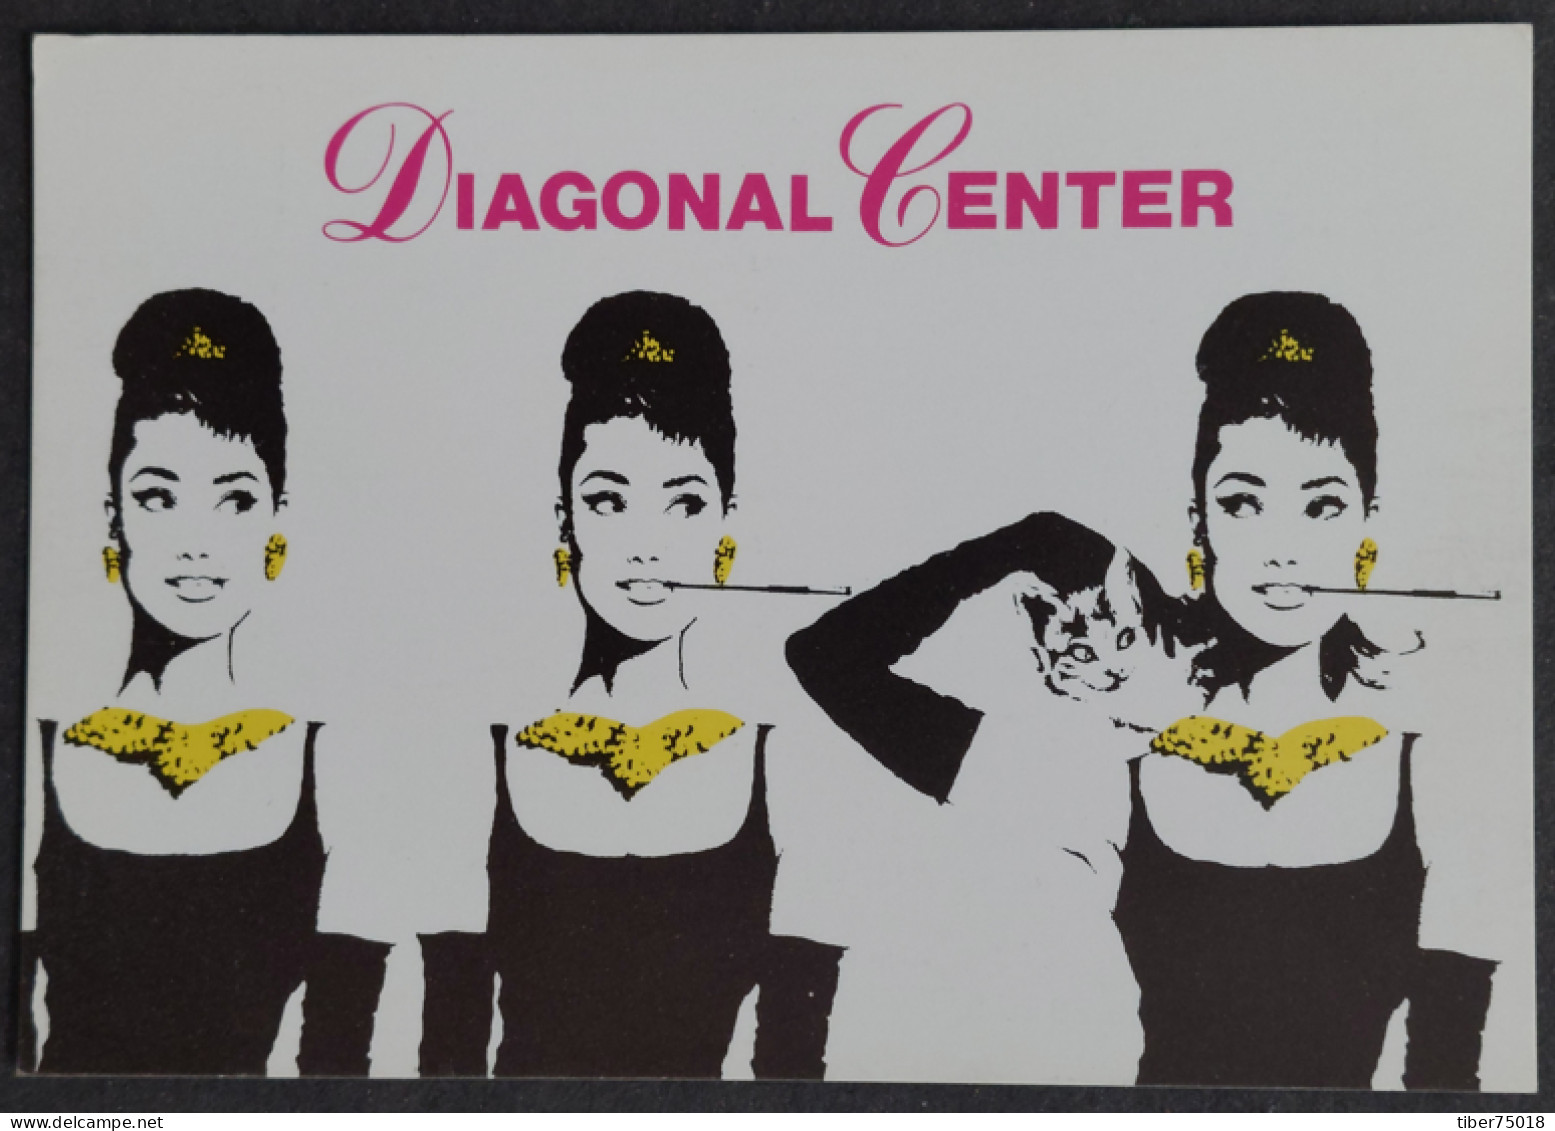 Carte Postale - Diagonal Center (Audrey Hepburn Dans "Breakfast At Tiffany's") (film - Cinéma) Barcelona - Advertising